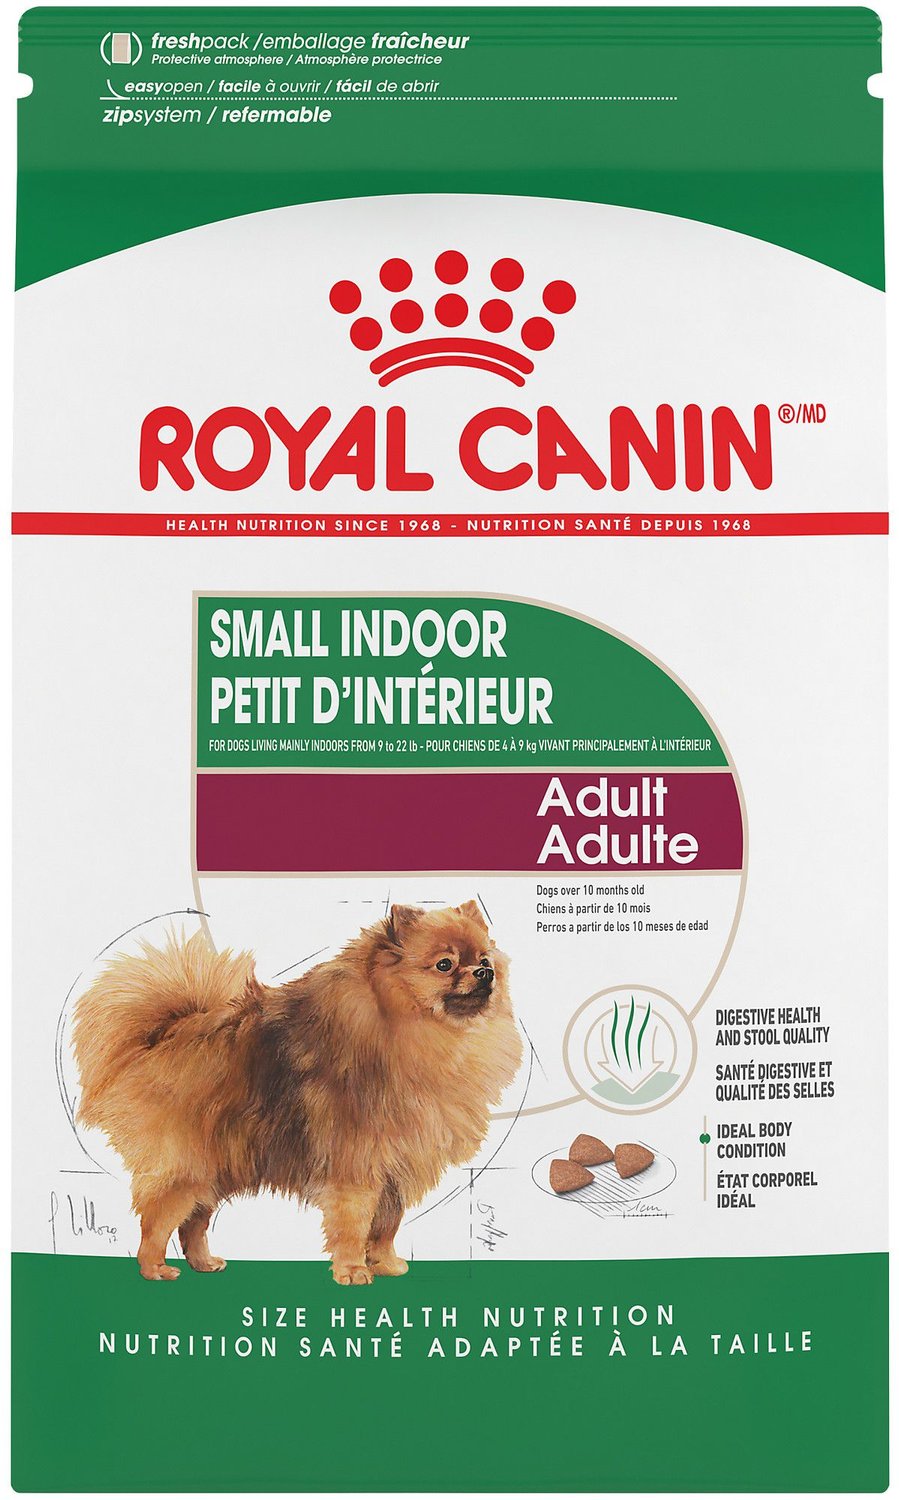 royal canin indoor sterilised